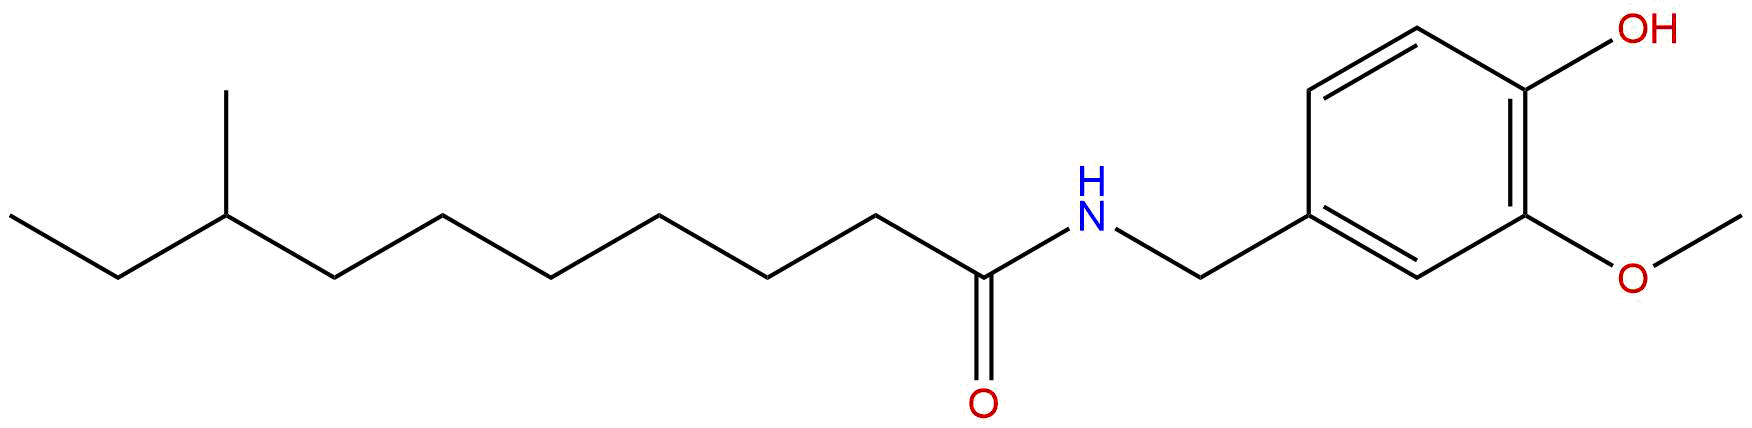 Homodihydrocapsaicin II